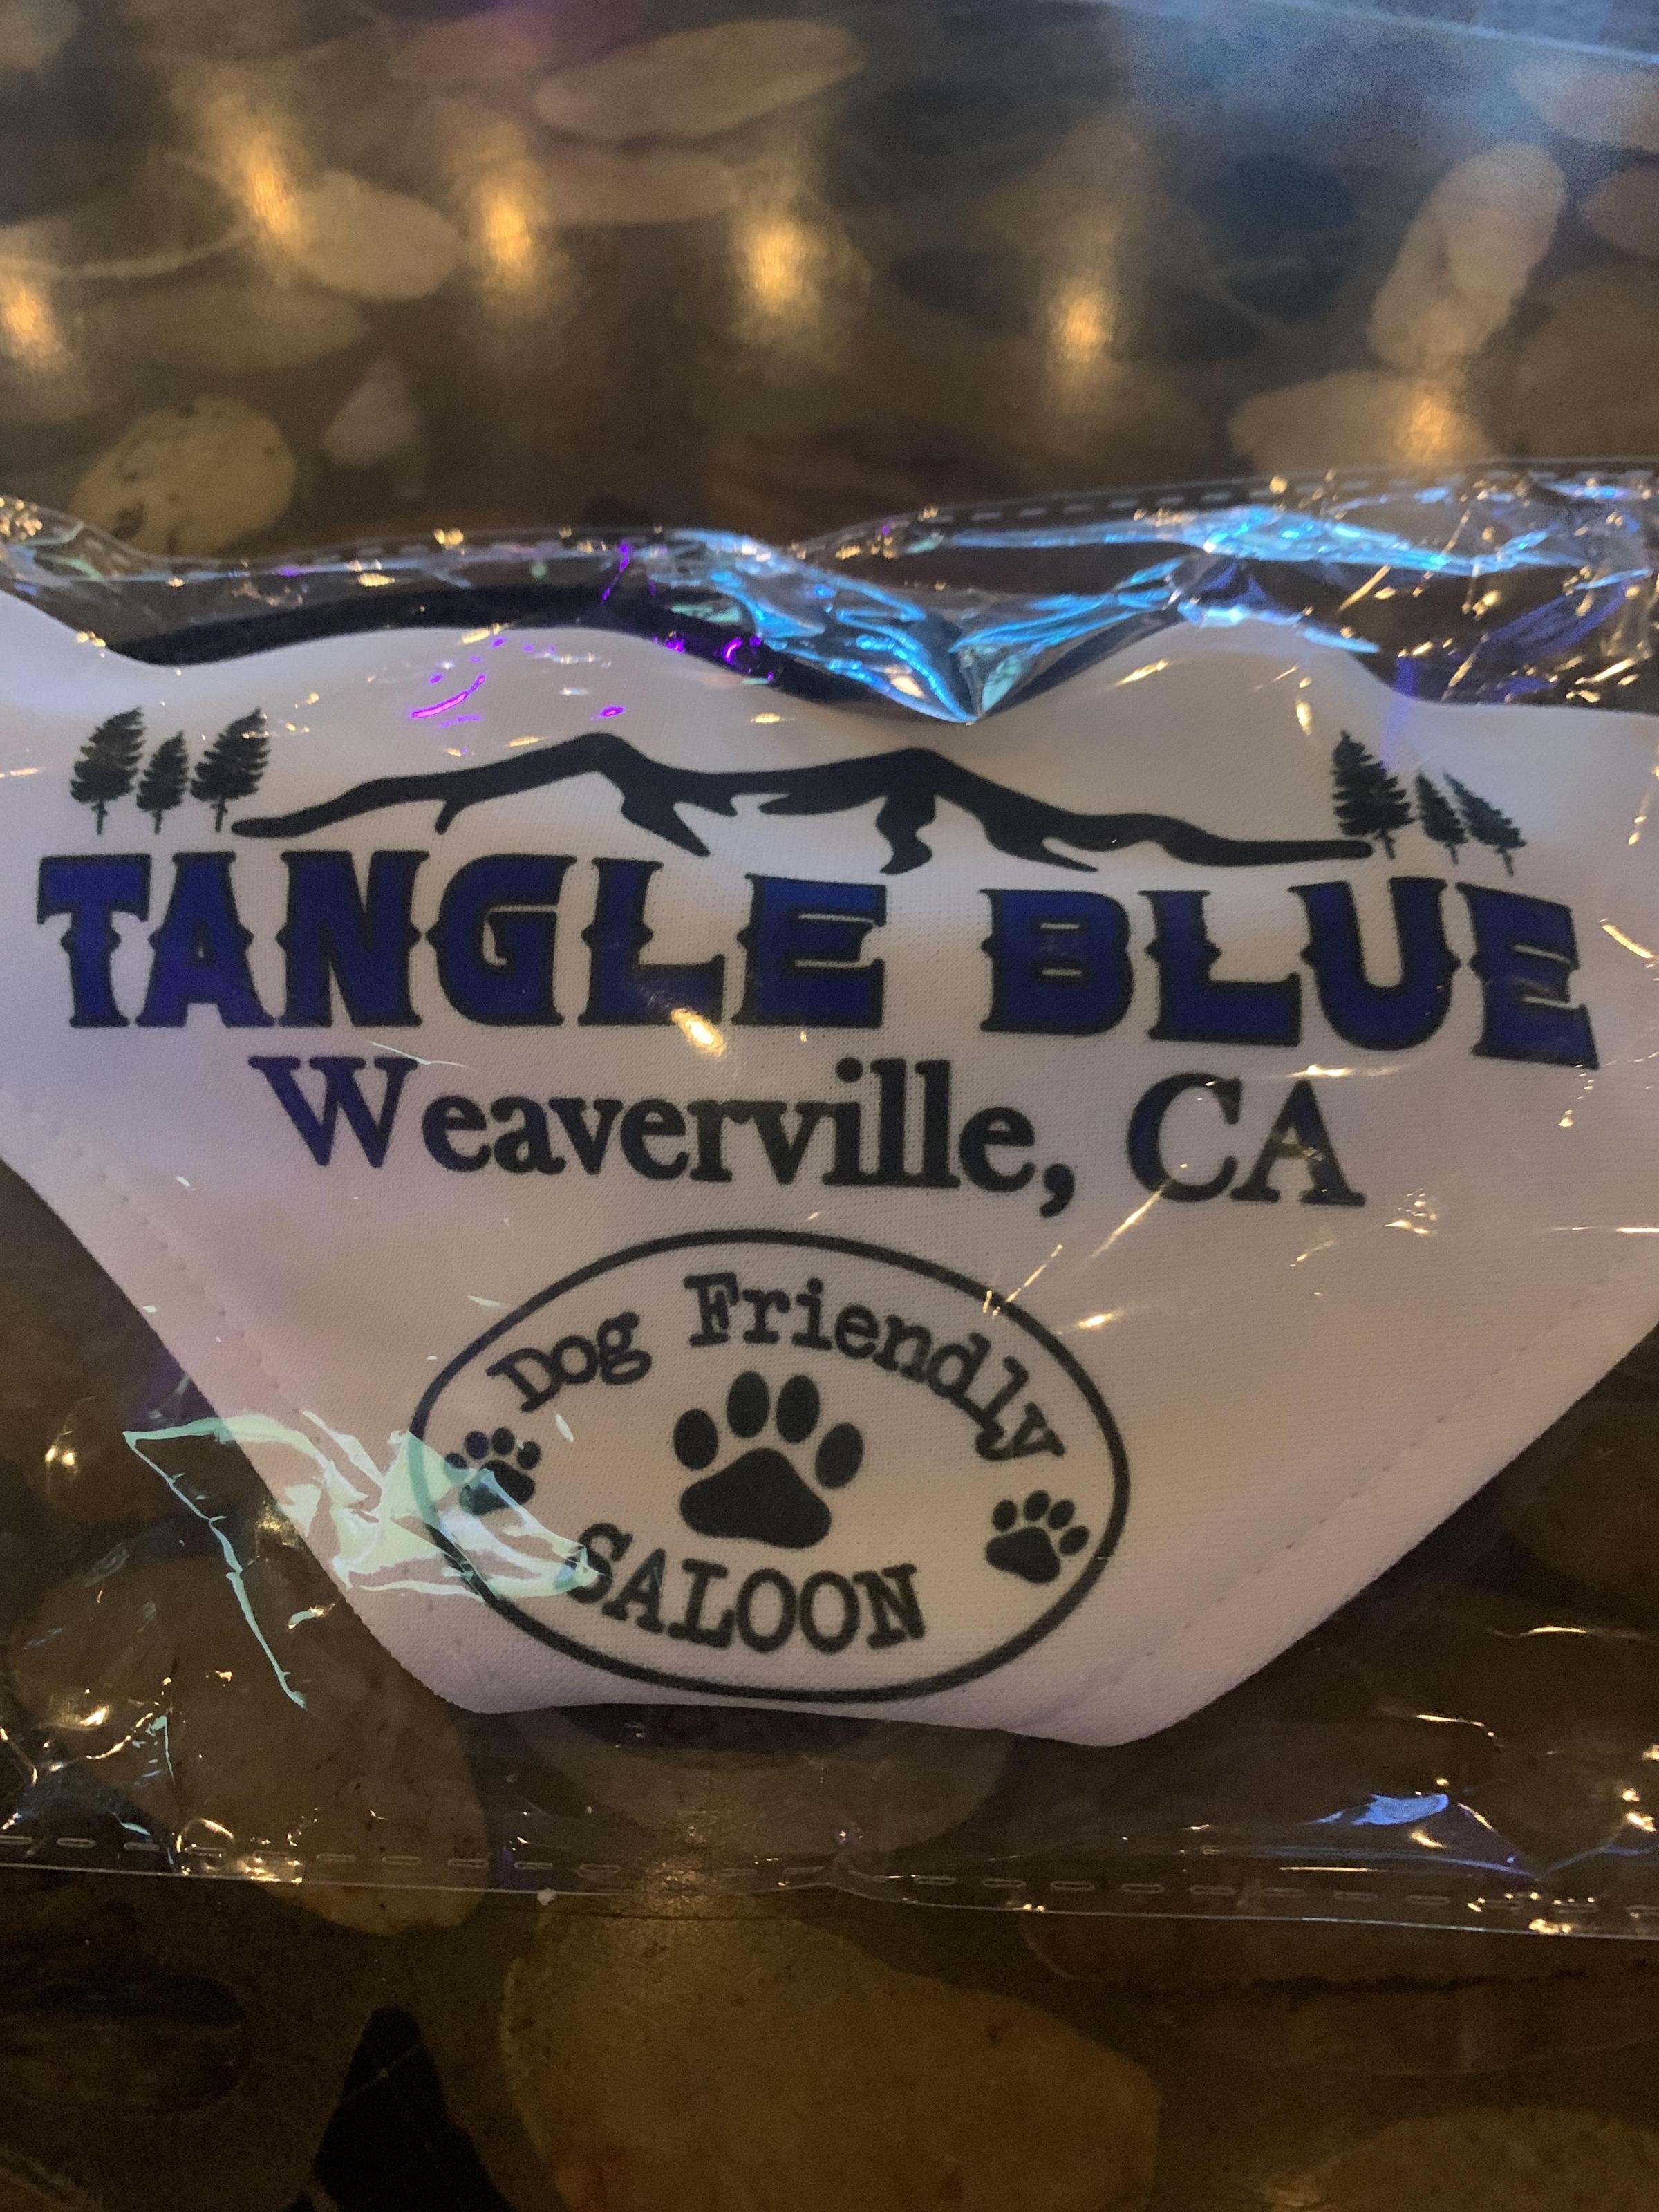 Pet Friendly Tangle Blue Saloon